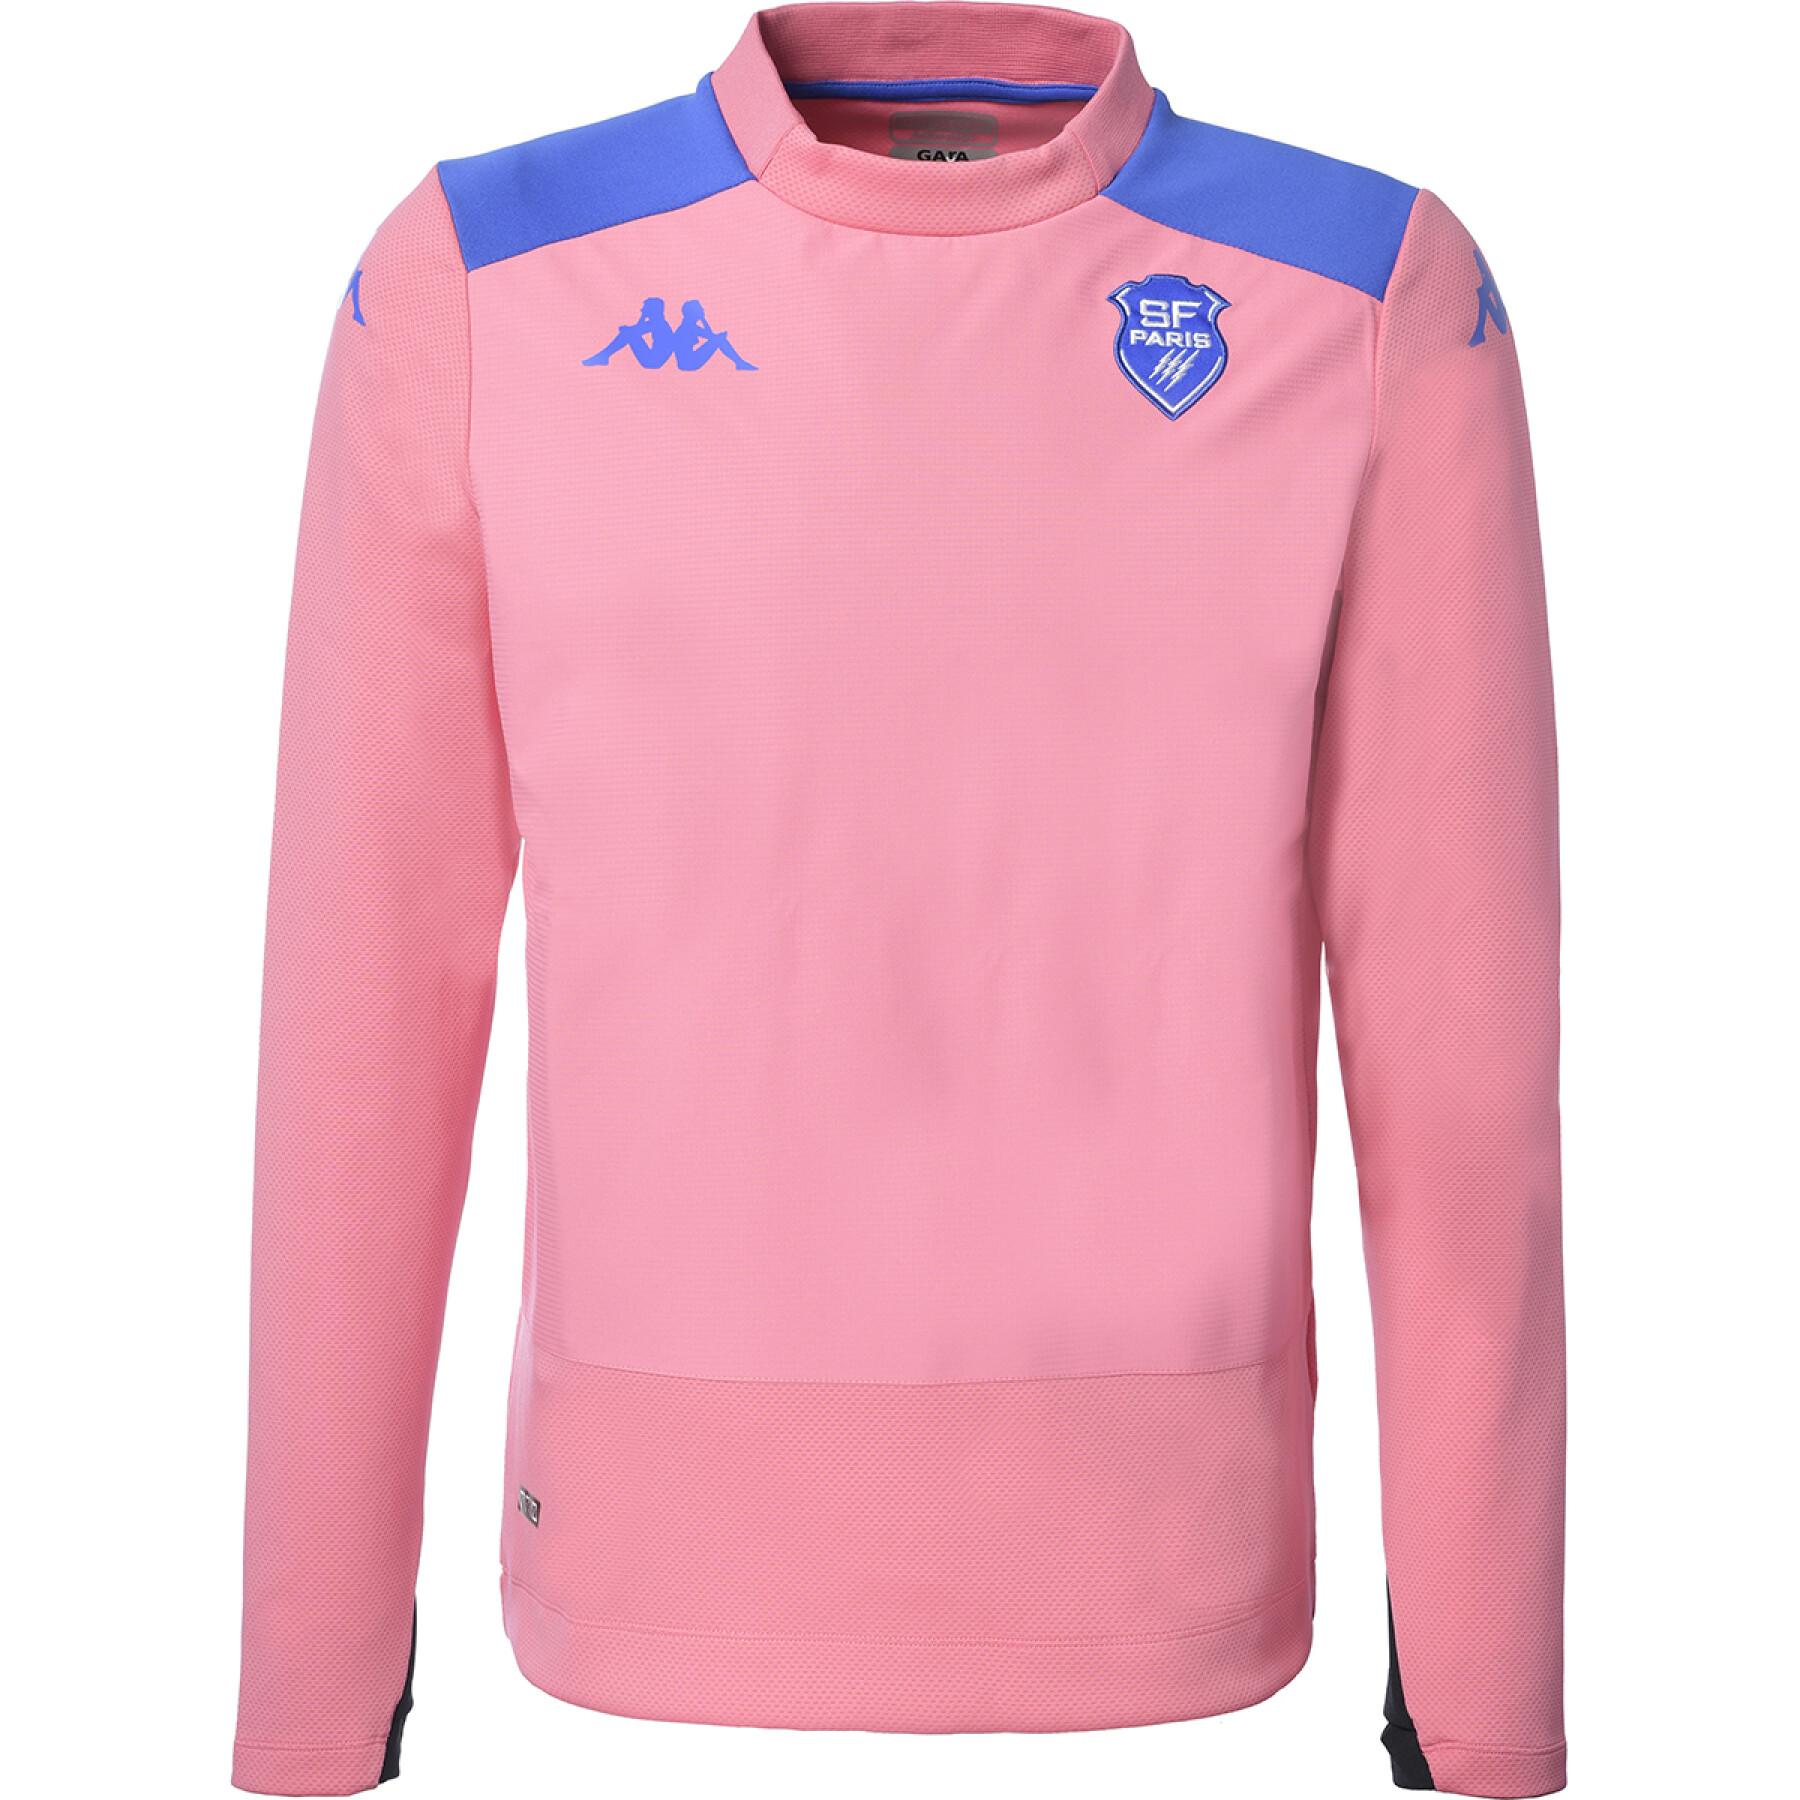 Trainings sweatshirt Stade Français 2021/22 - apron pro 5